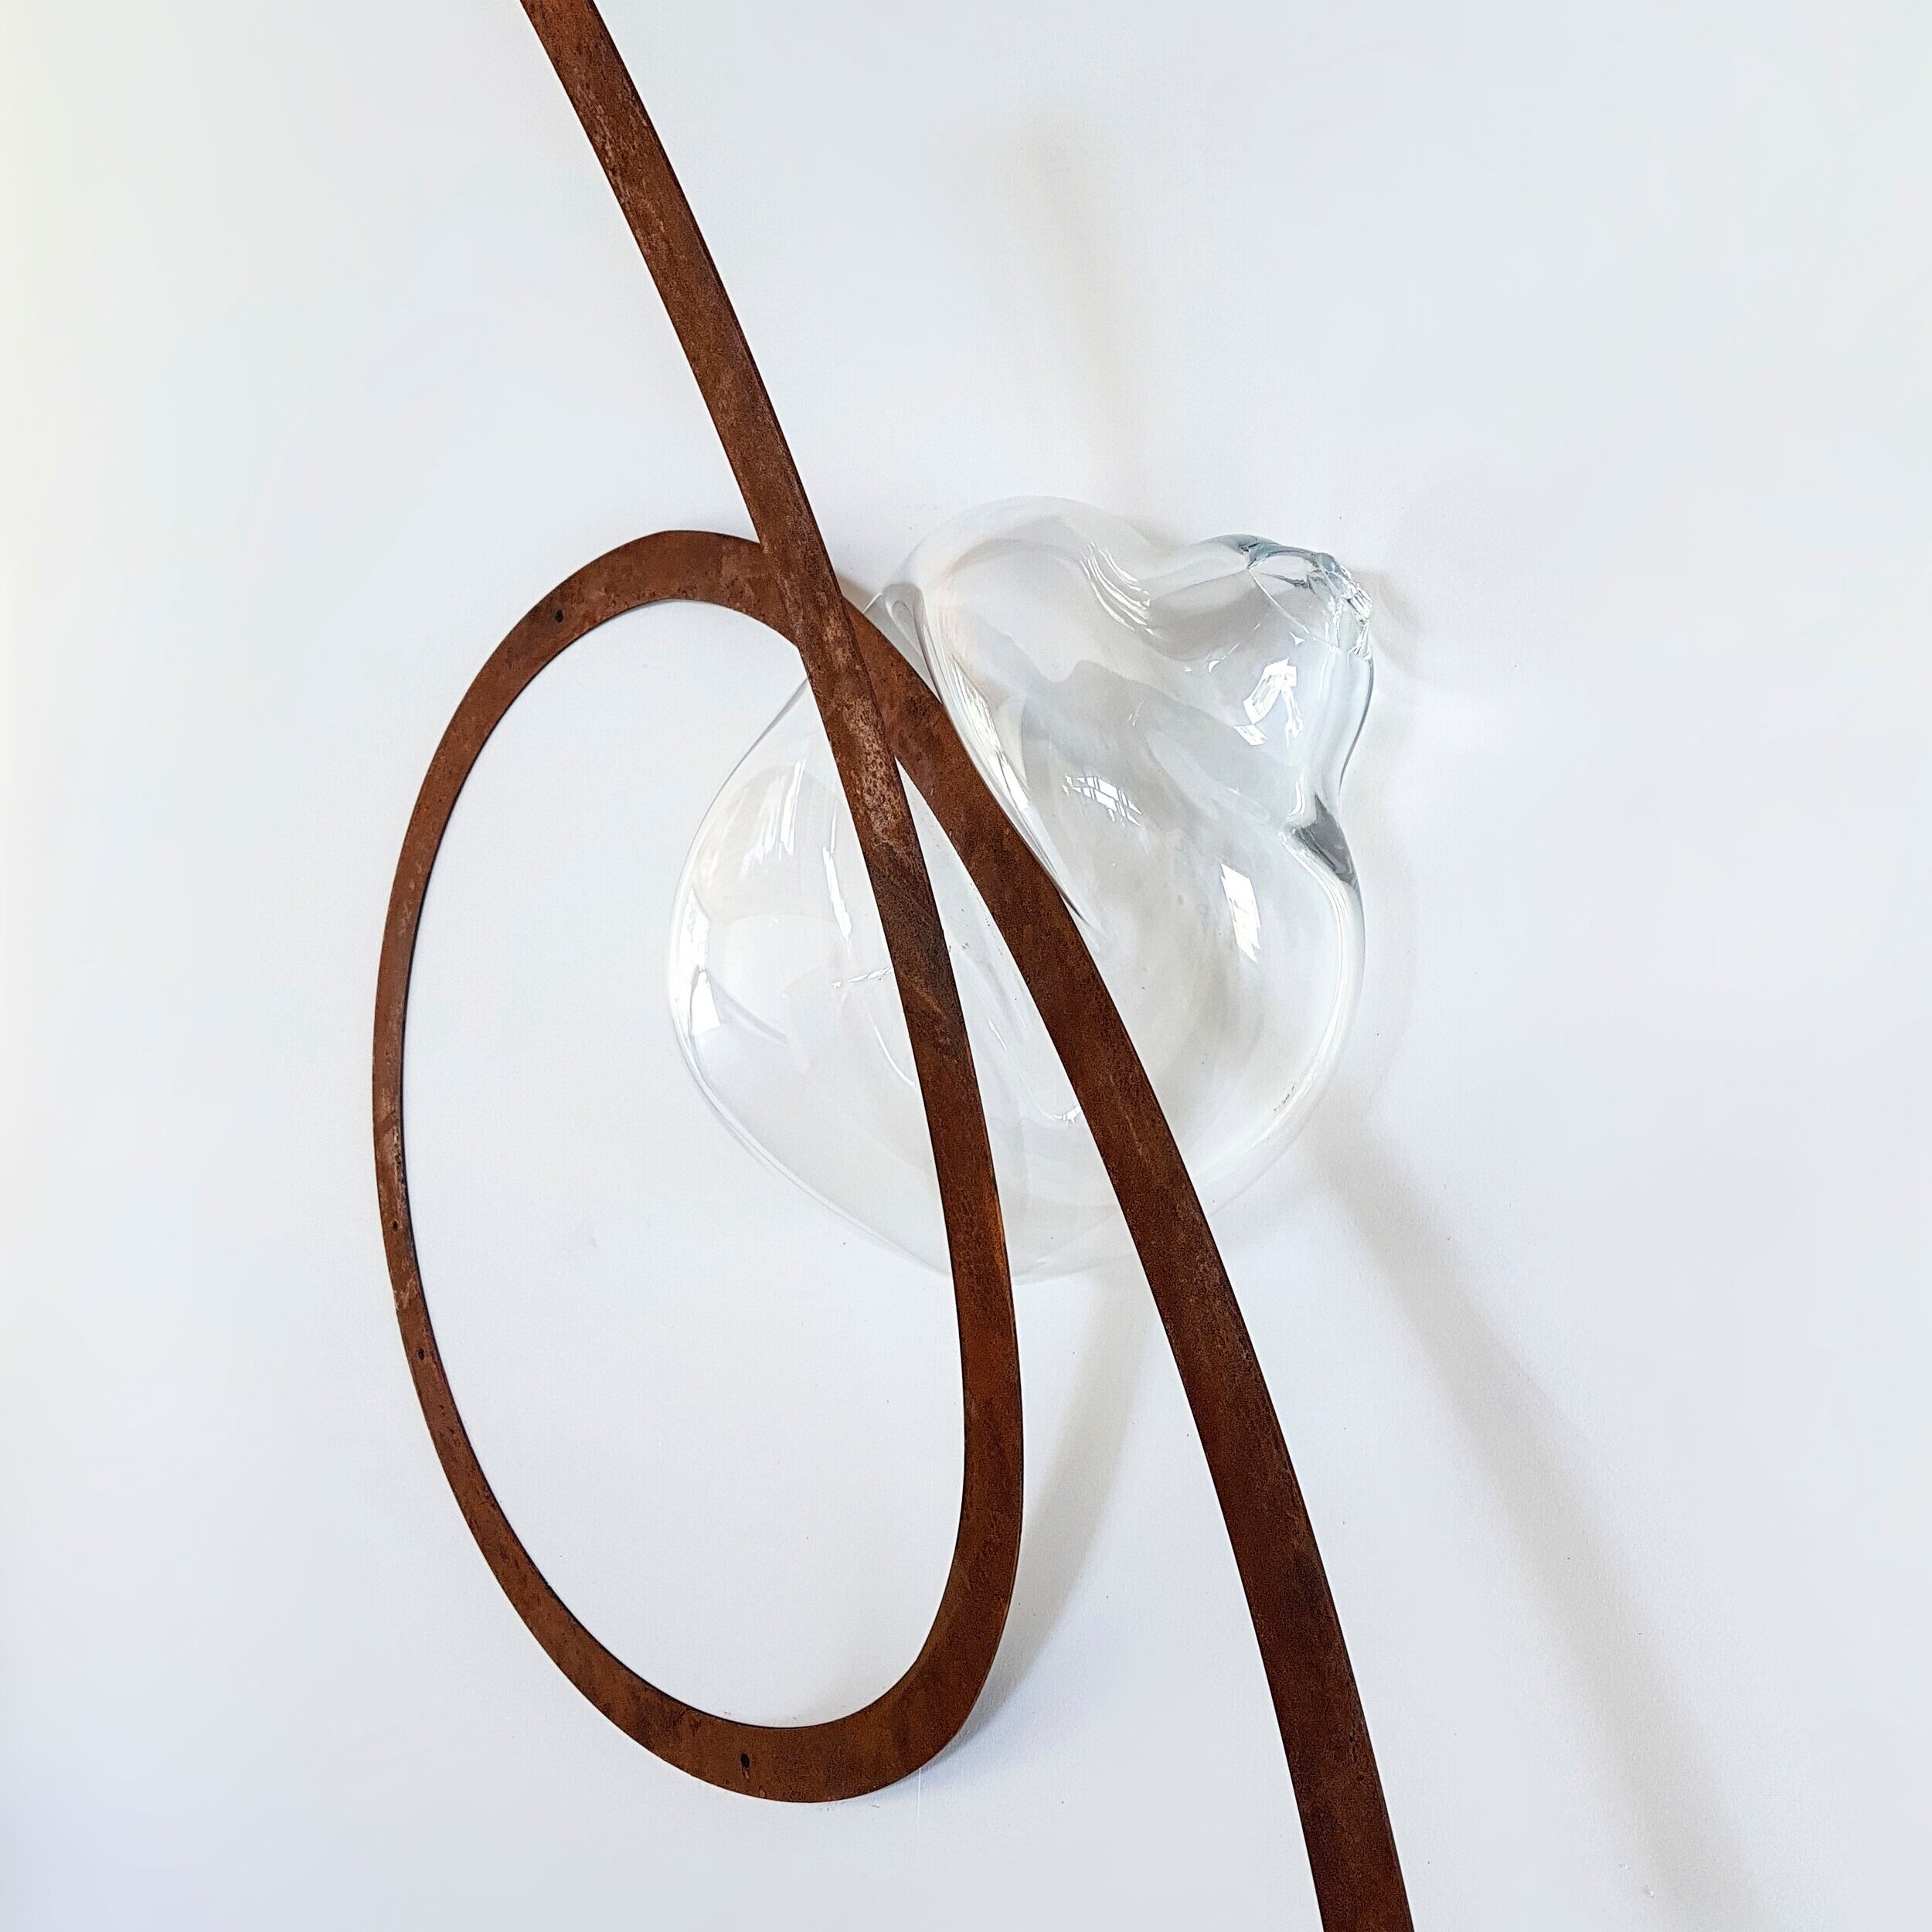   Túlio Pinto  Complicity Vector #4  , 2018  Glass bubble and steel  120 x 130 x 41 cm  Piero Atchugarry Gallery 